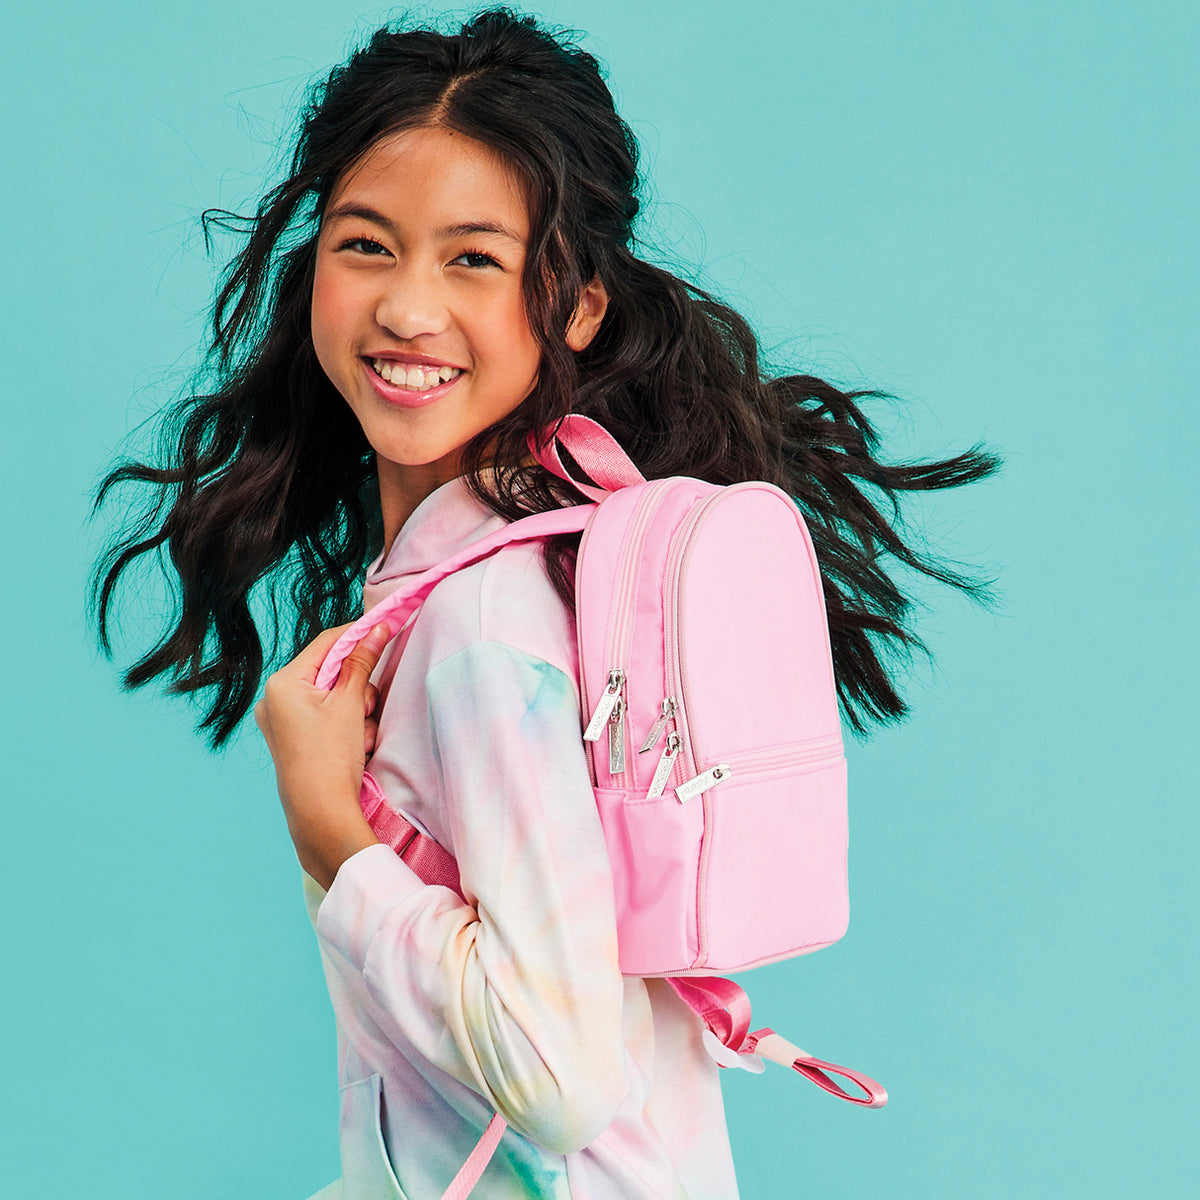 Pink Nylon Mini Backpack Cover